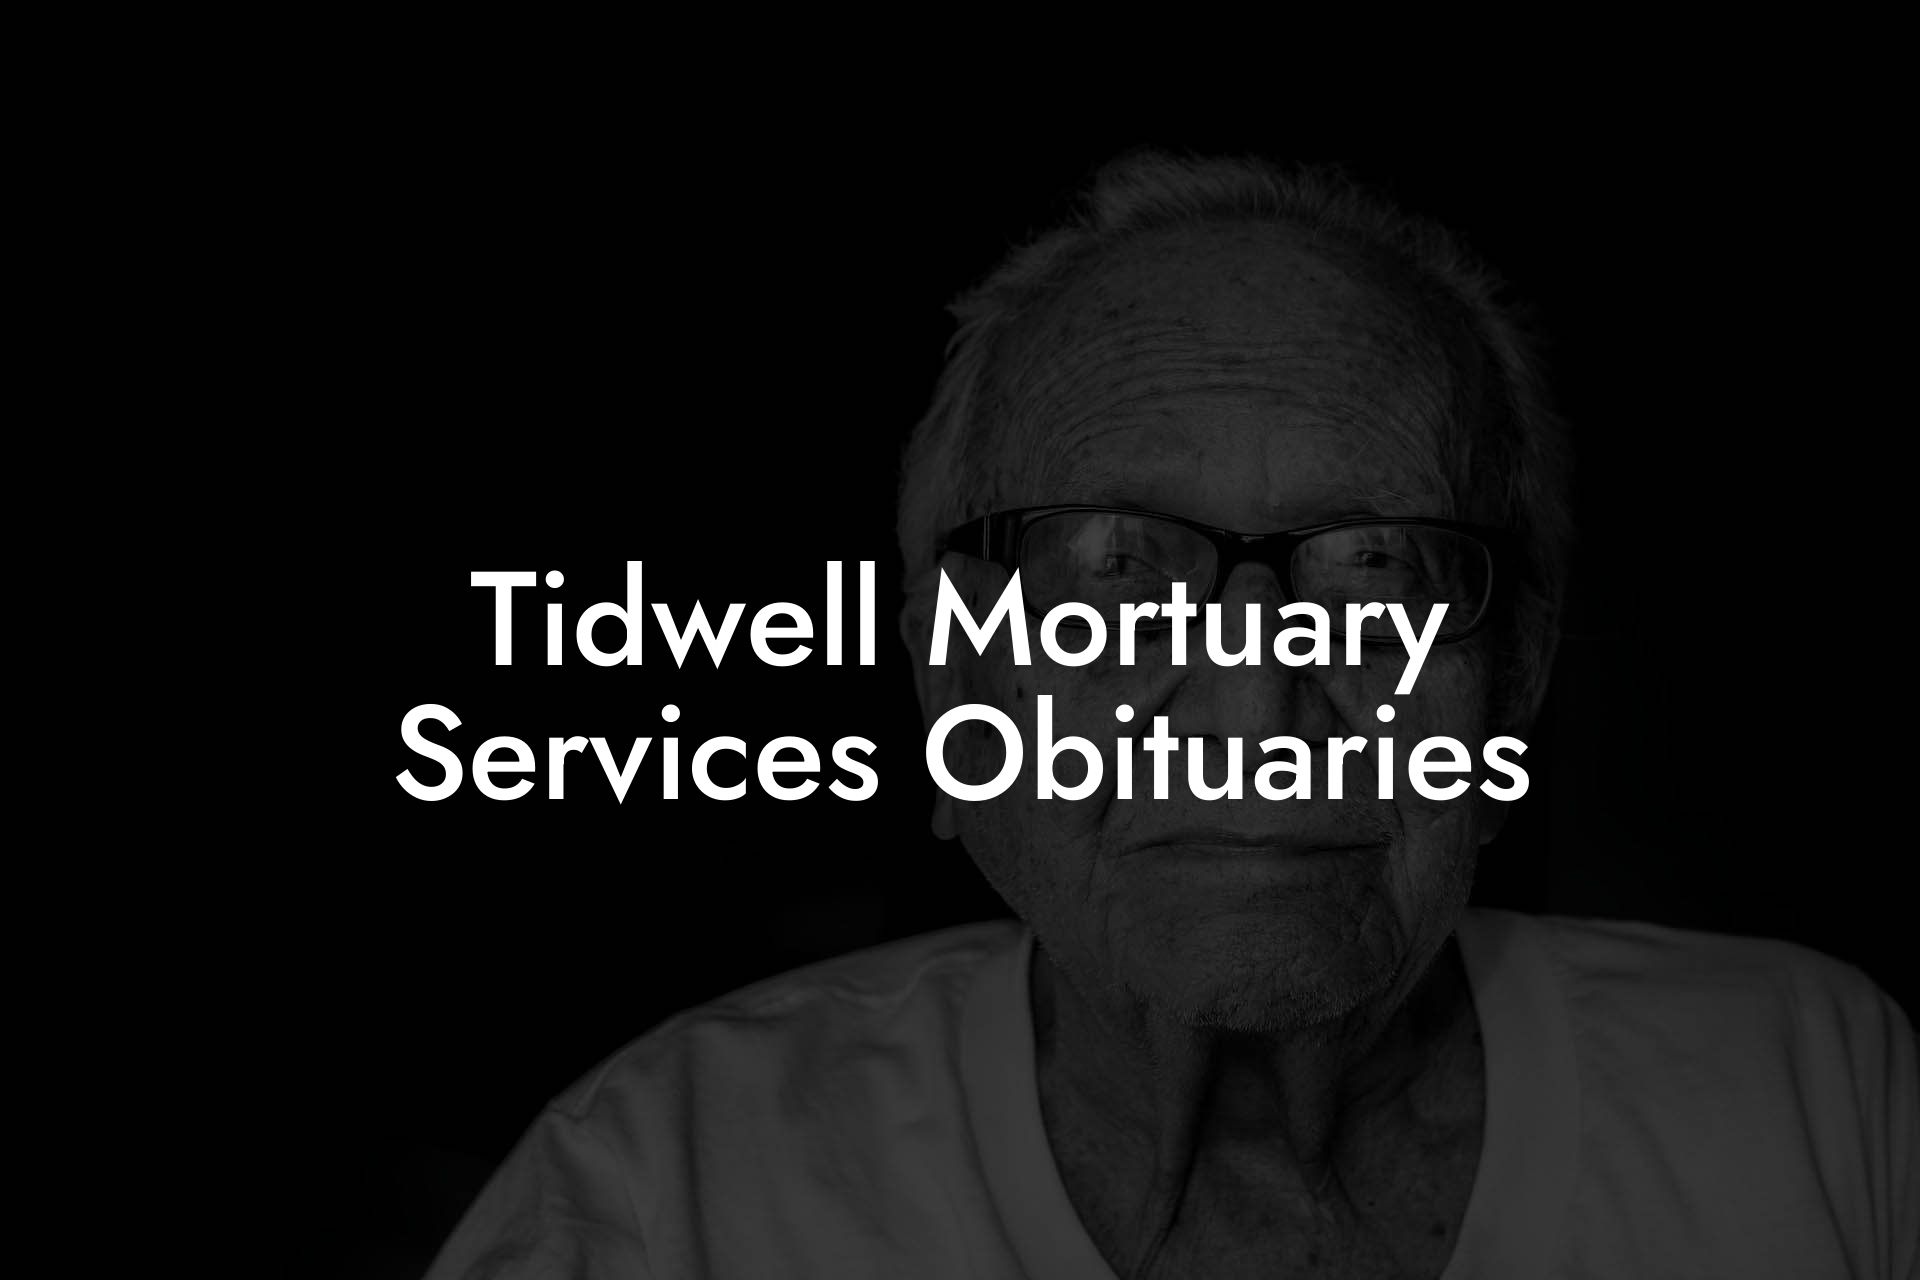 Tidwell Mortuary Services Obituaries